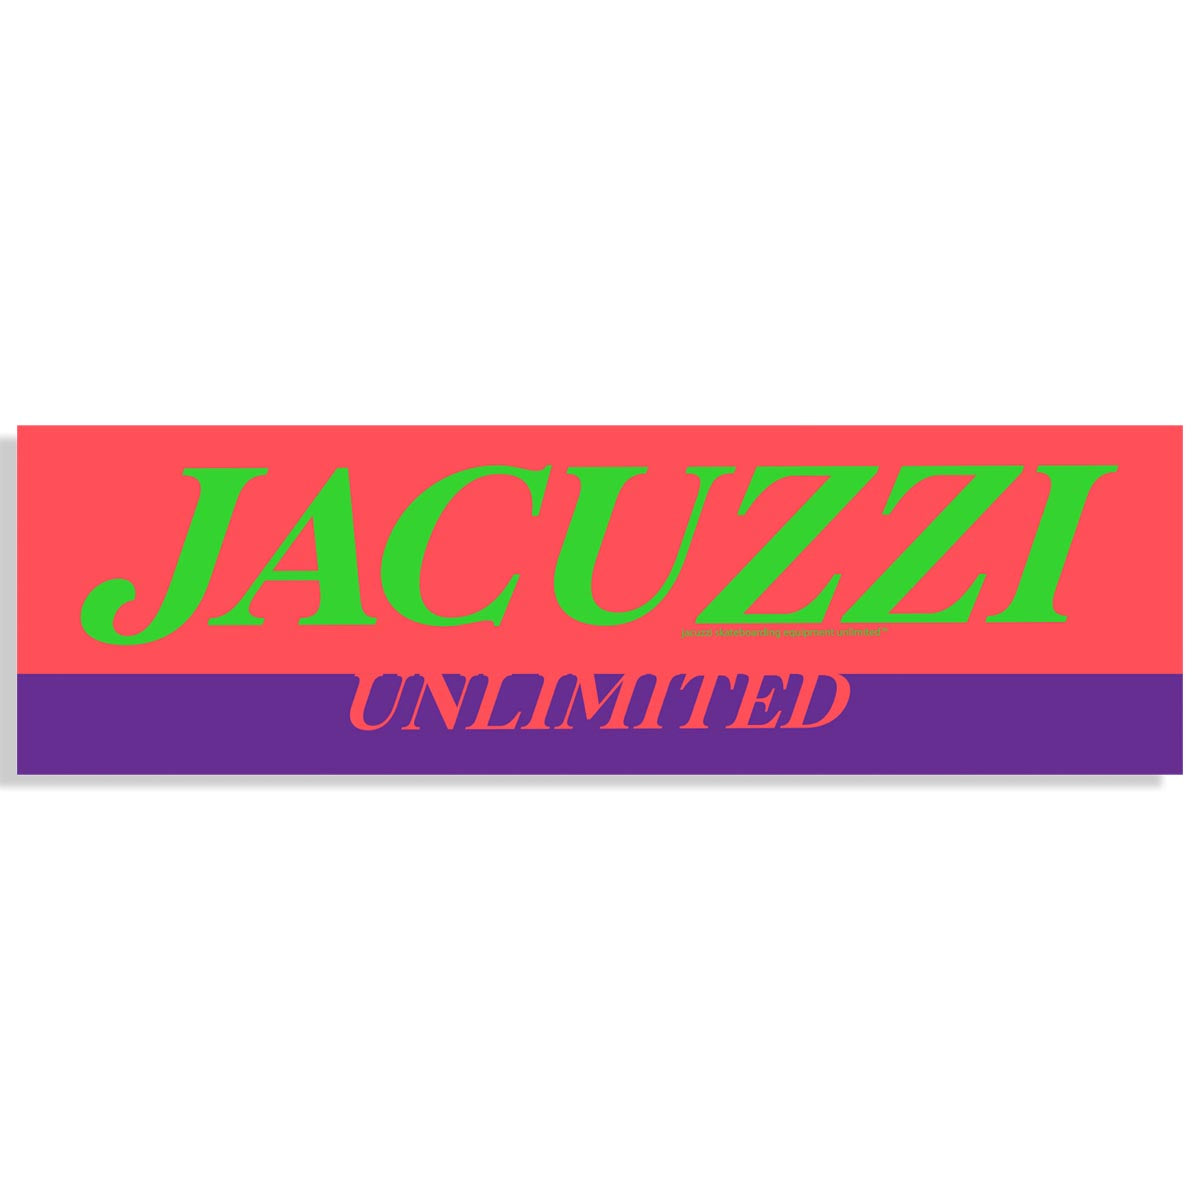 Jacuzzi Unlimited Flavor Logo Sticker image 1